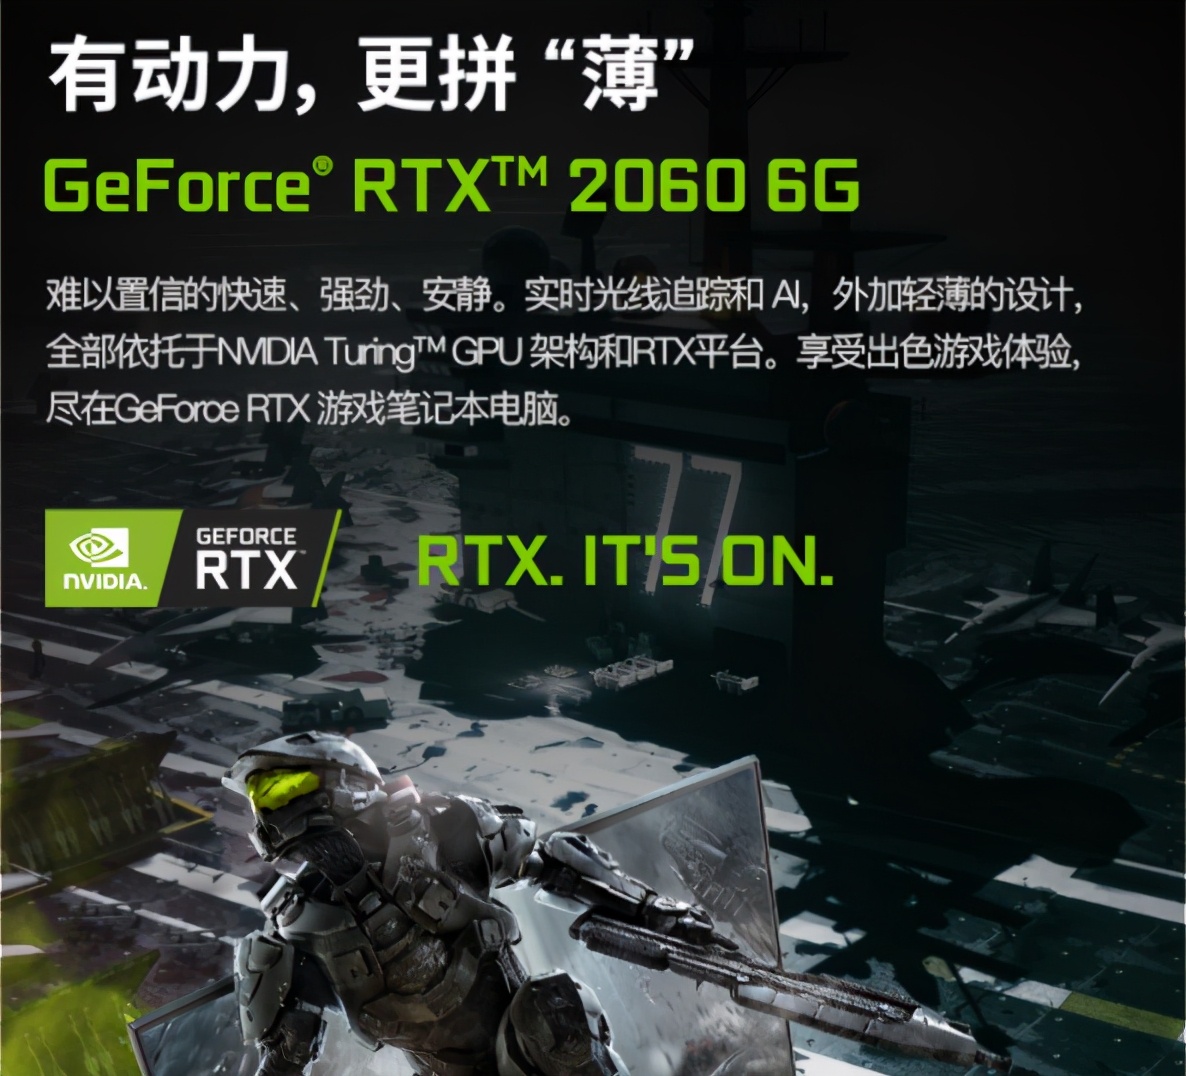 GeForce RTX显卡神舟战神游戏本双11给你惊喜